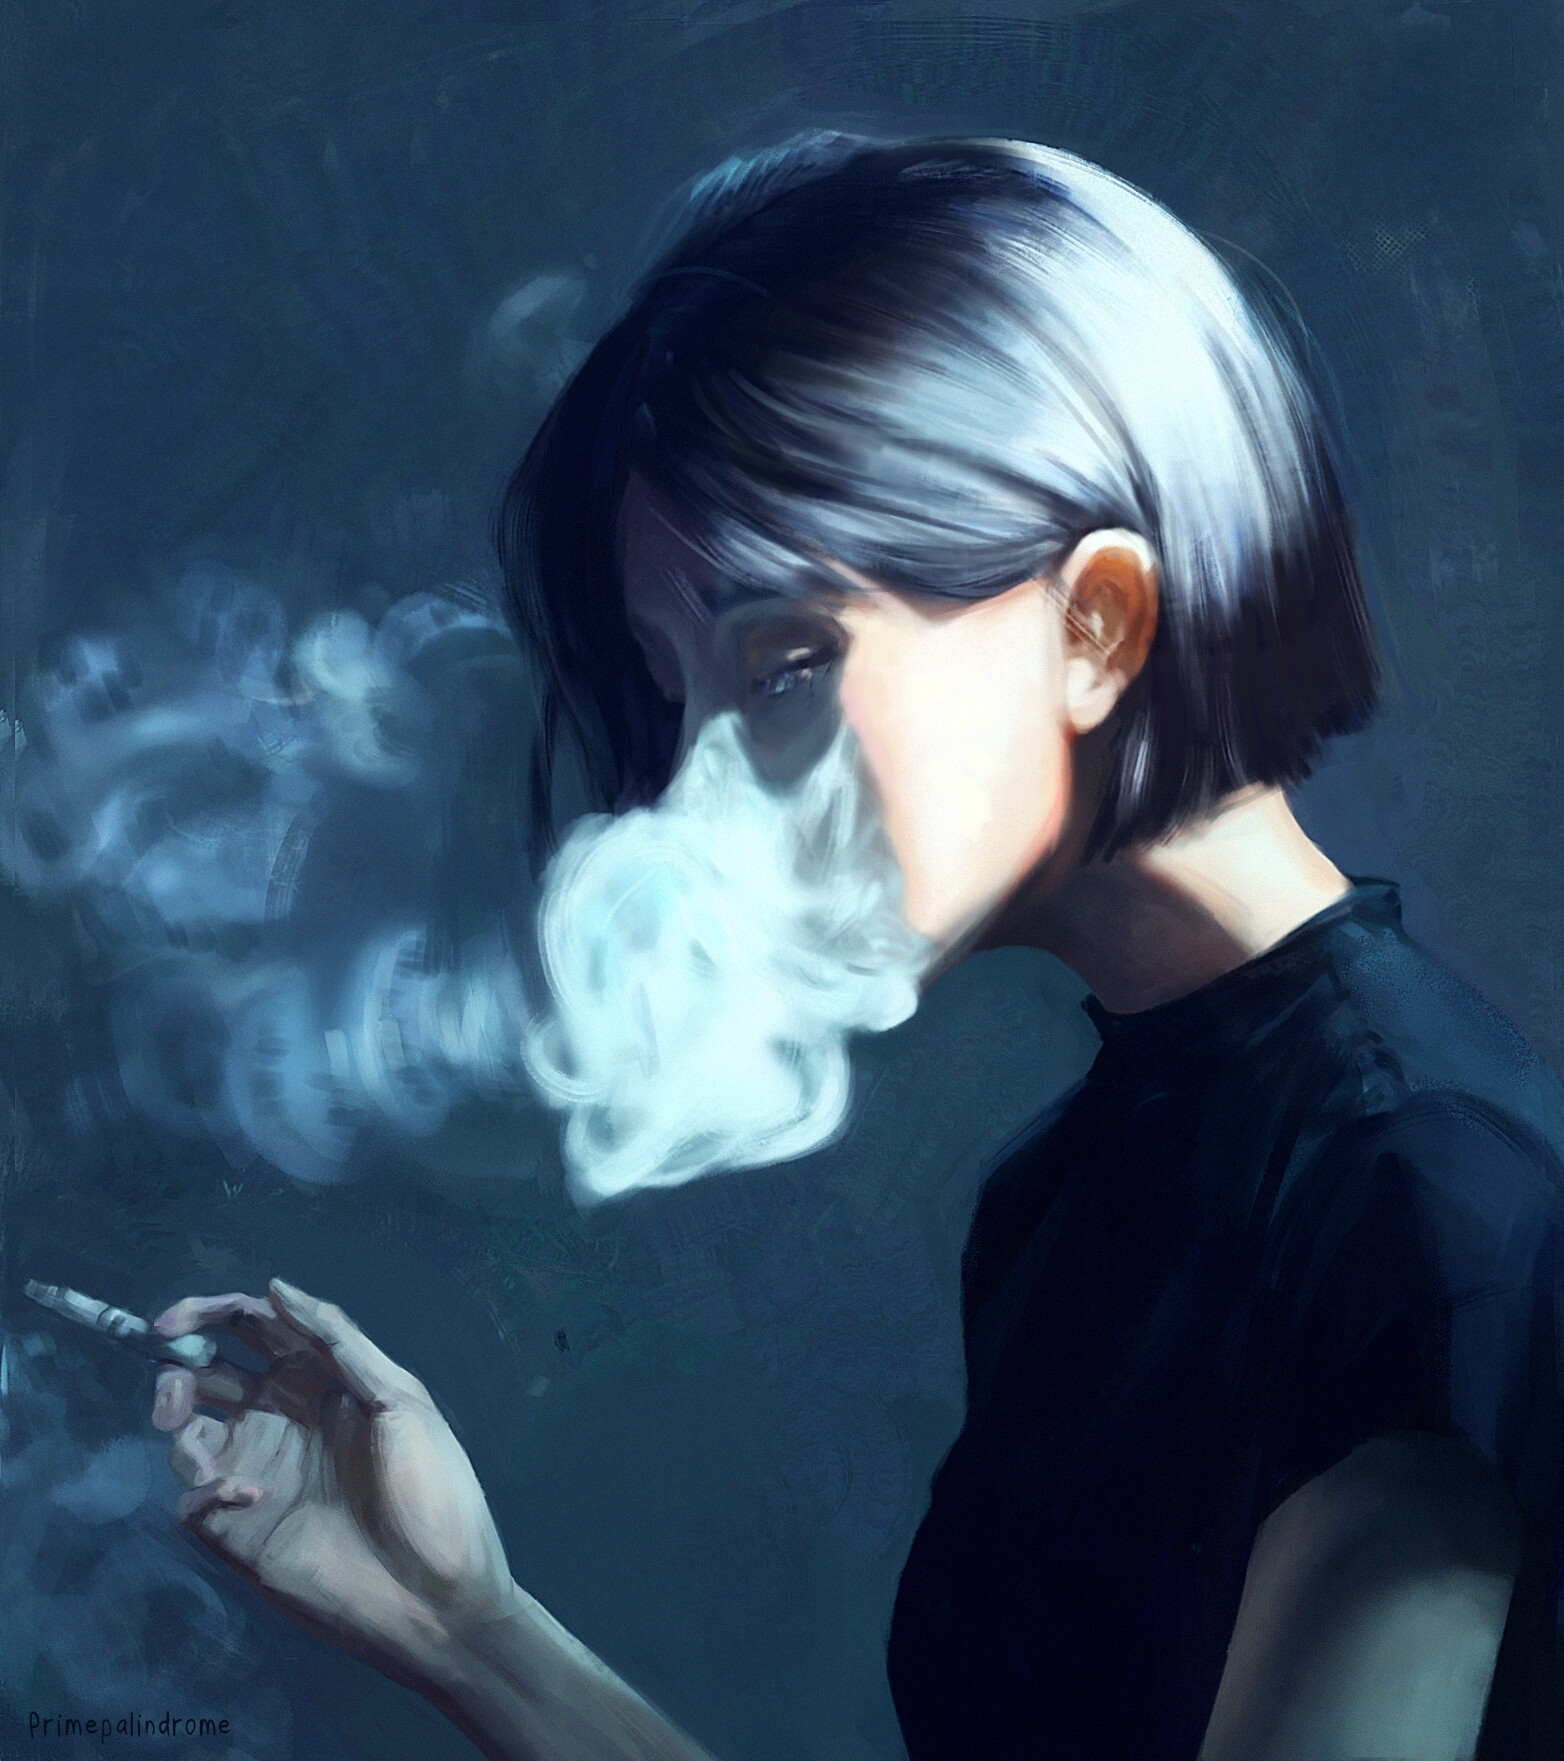 Anime - Smoking by DizzMant on DeviantArt